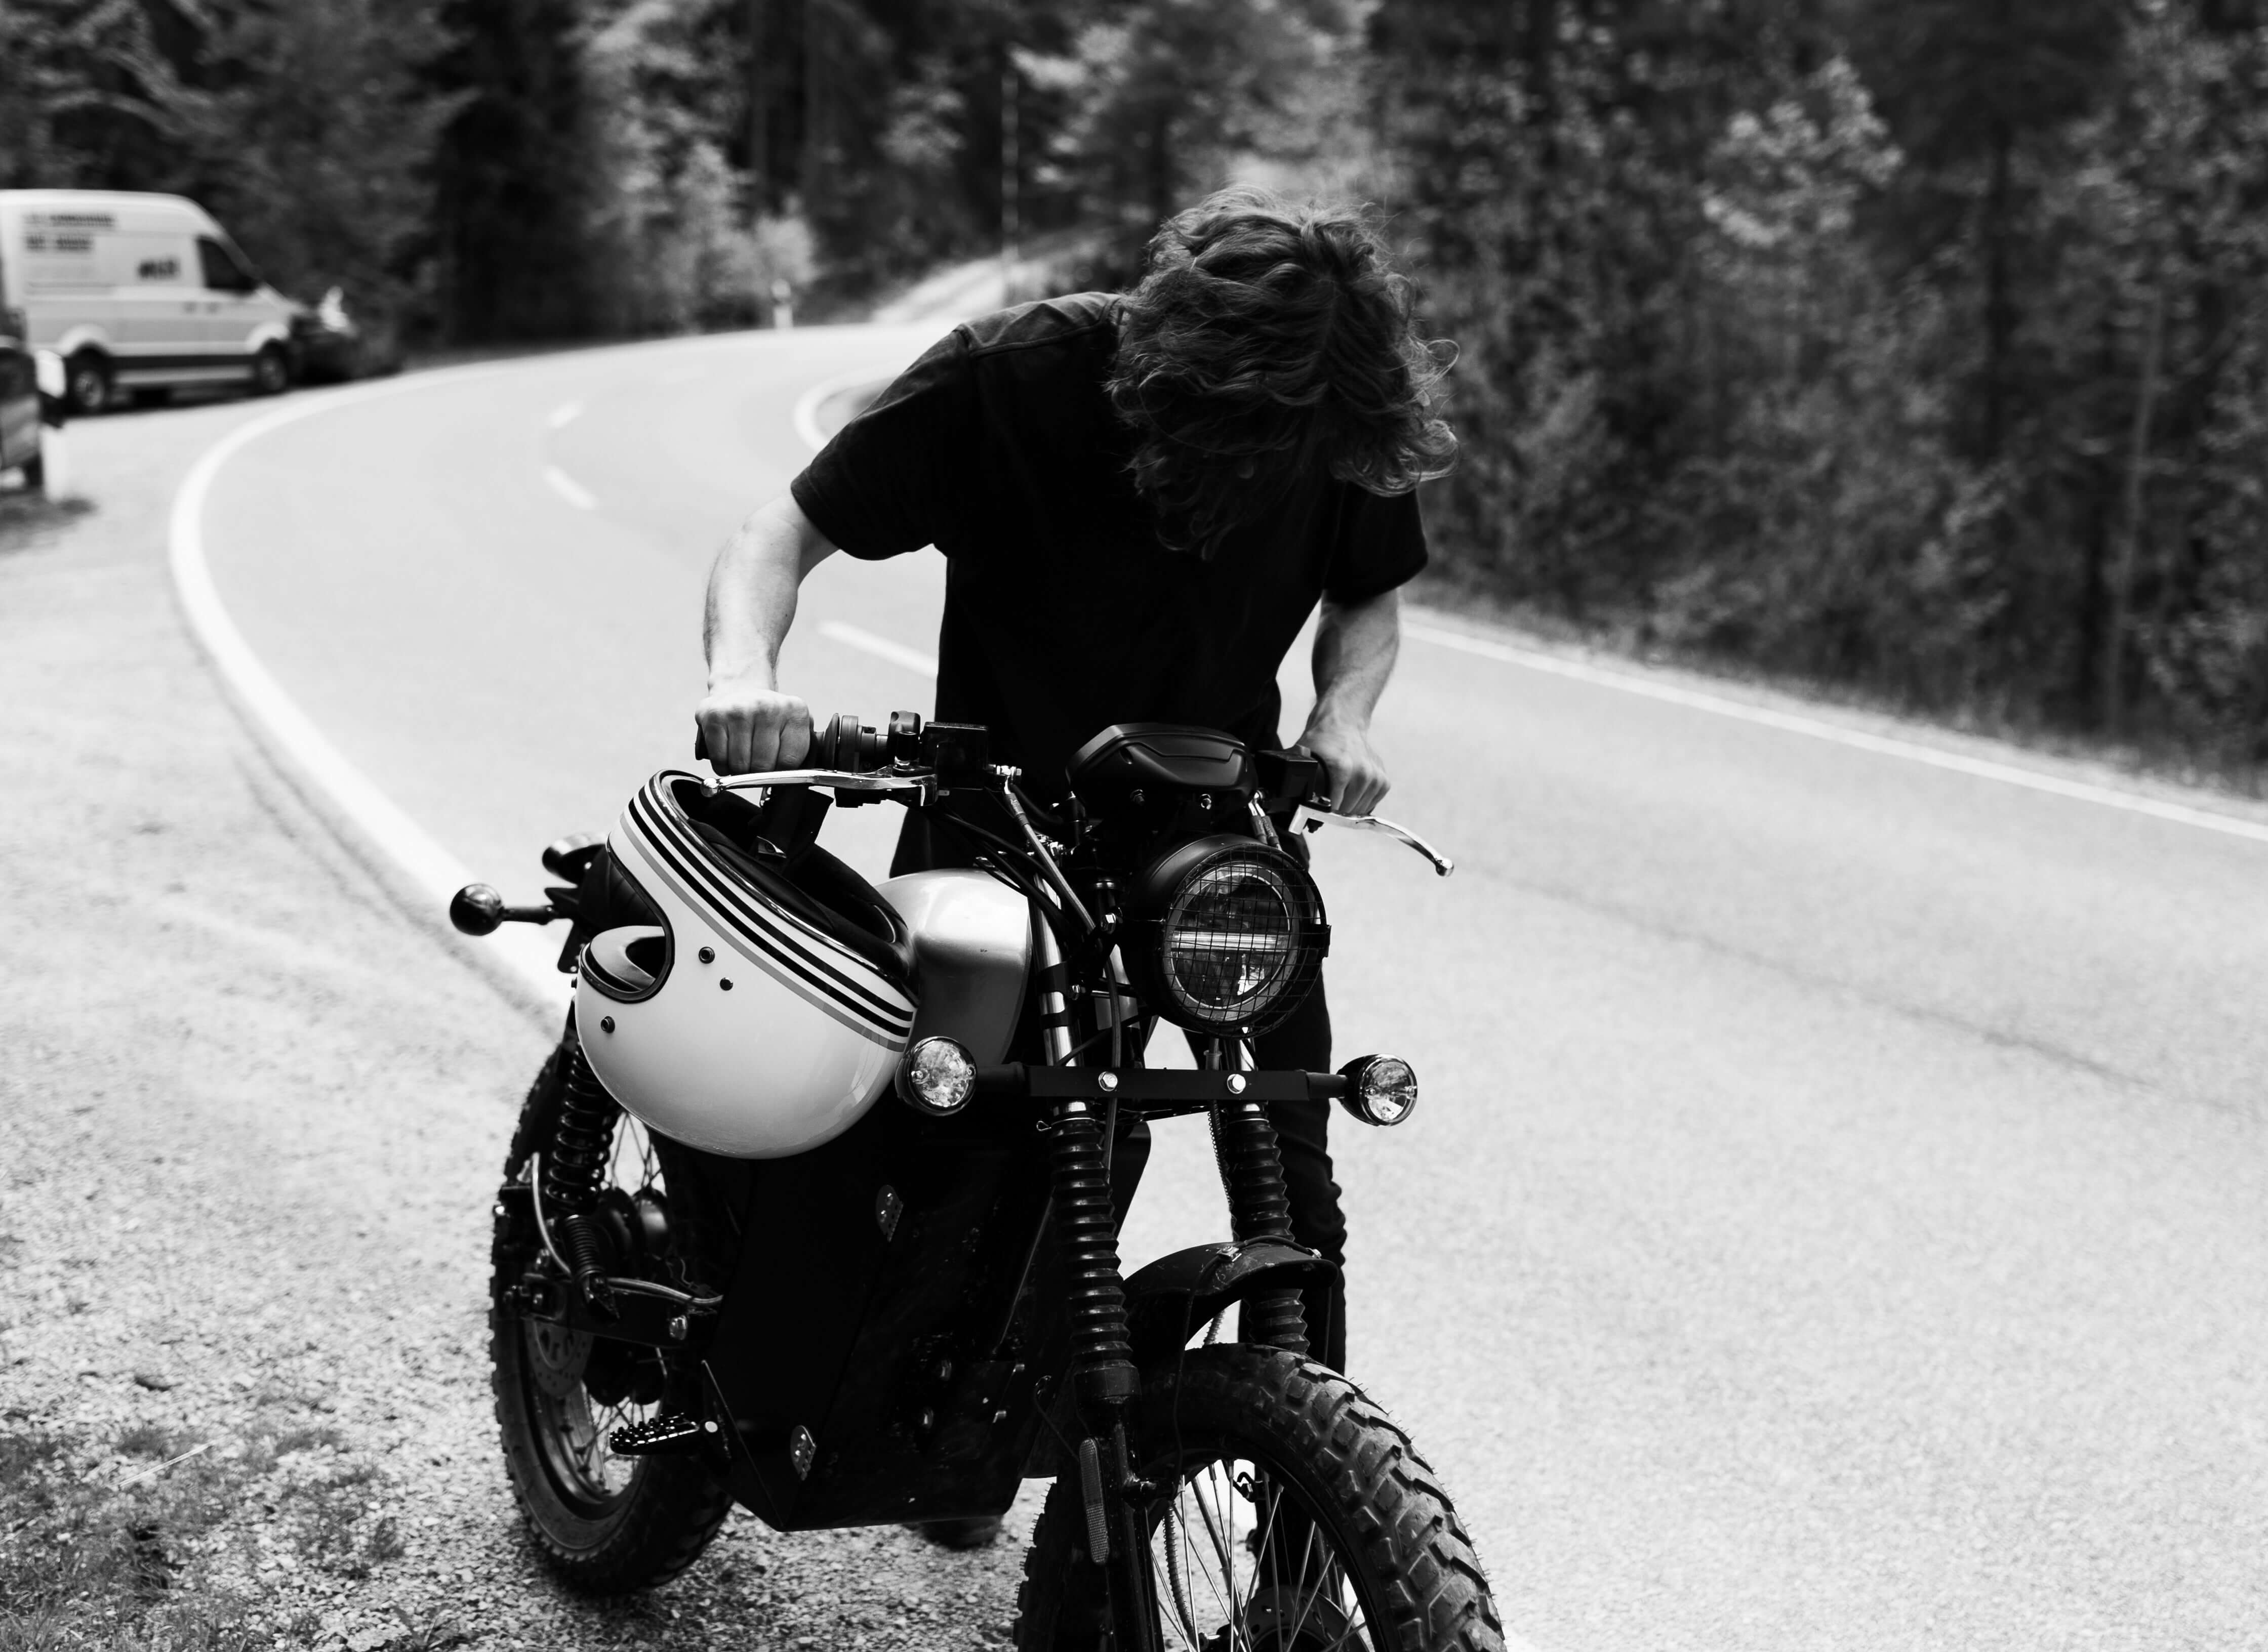 Bonfire & Motorcycle Rider